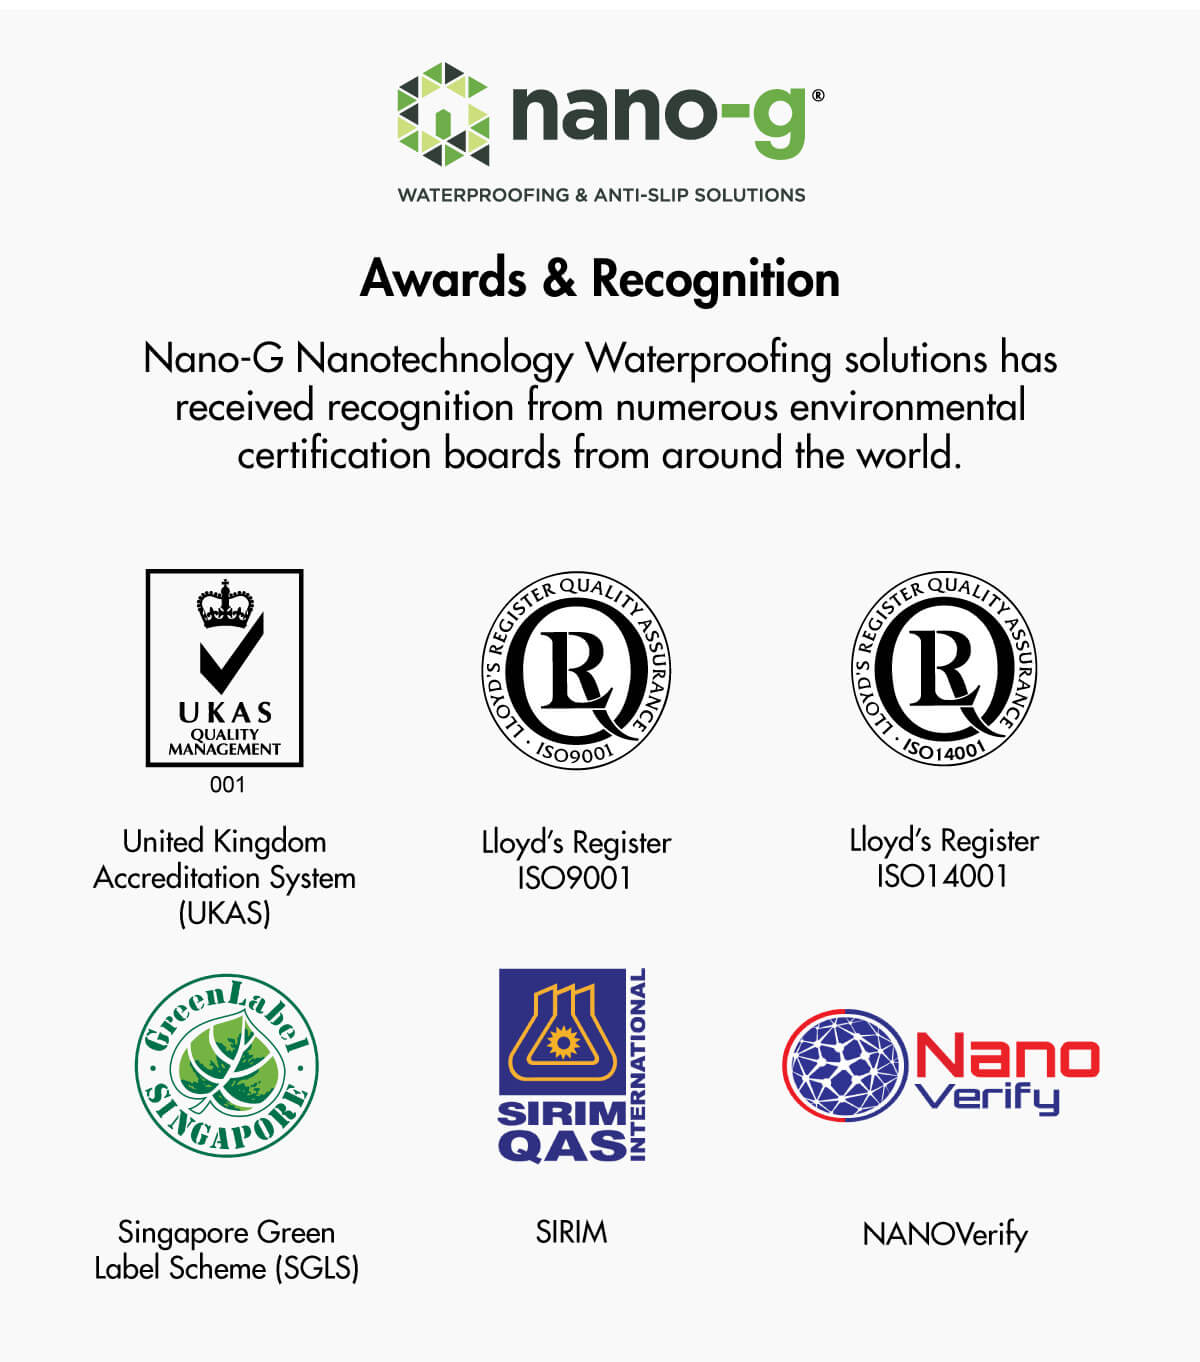 Nano-G's Award & Recognitions